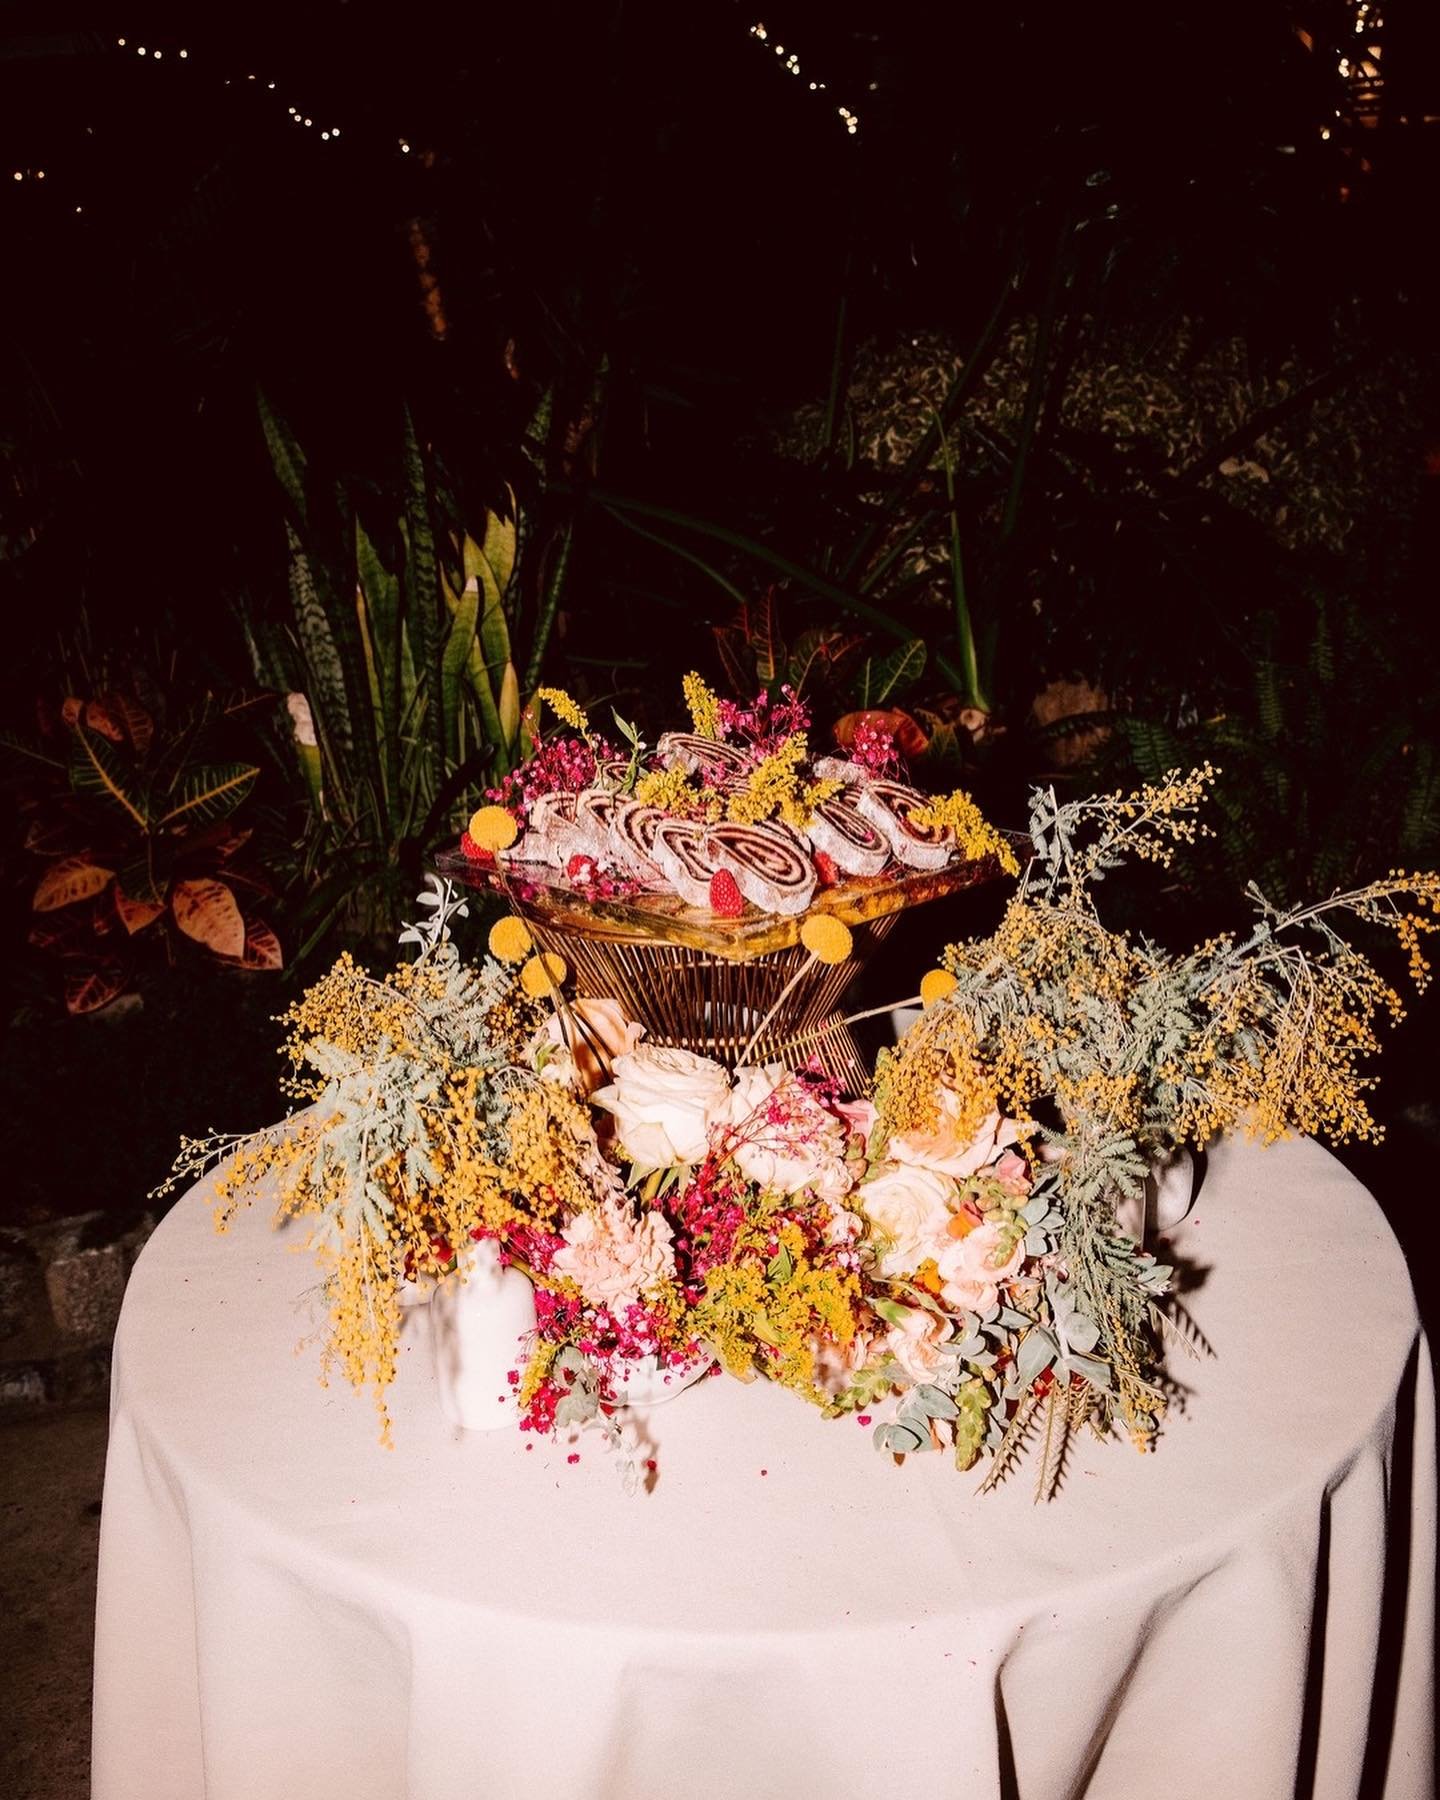 The sweetest ending for this Philadelphia wedding, a Japanese jelly roll cake from @danishbakers.
⠀⠀⠀⠀⠀⠀⠀⠀⠀
Photos: @welaughwelove 
Wedding Management: @wedo.events 
Cake: @danishbakers 
Venue: @byconstellation
Flowers: @flowerclvb 
Hair: @arielkatri